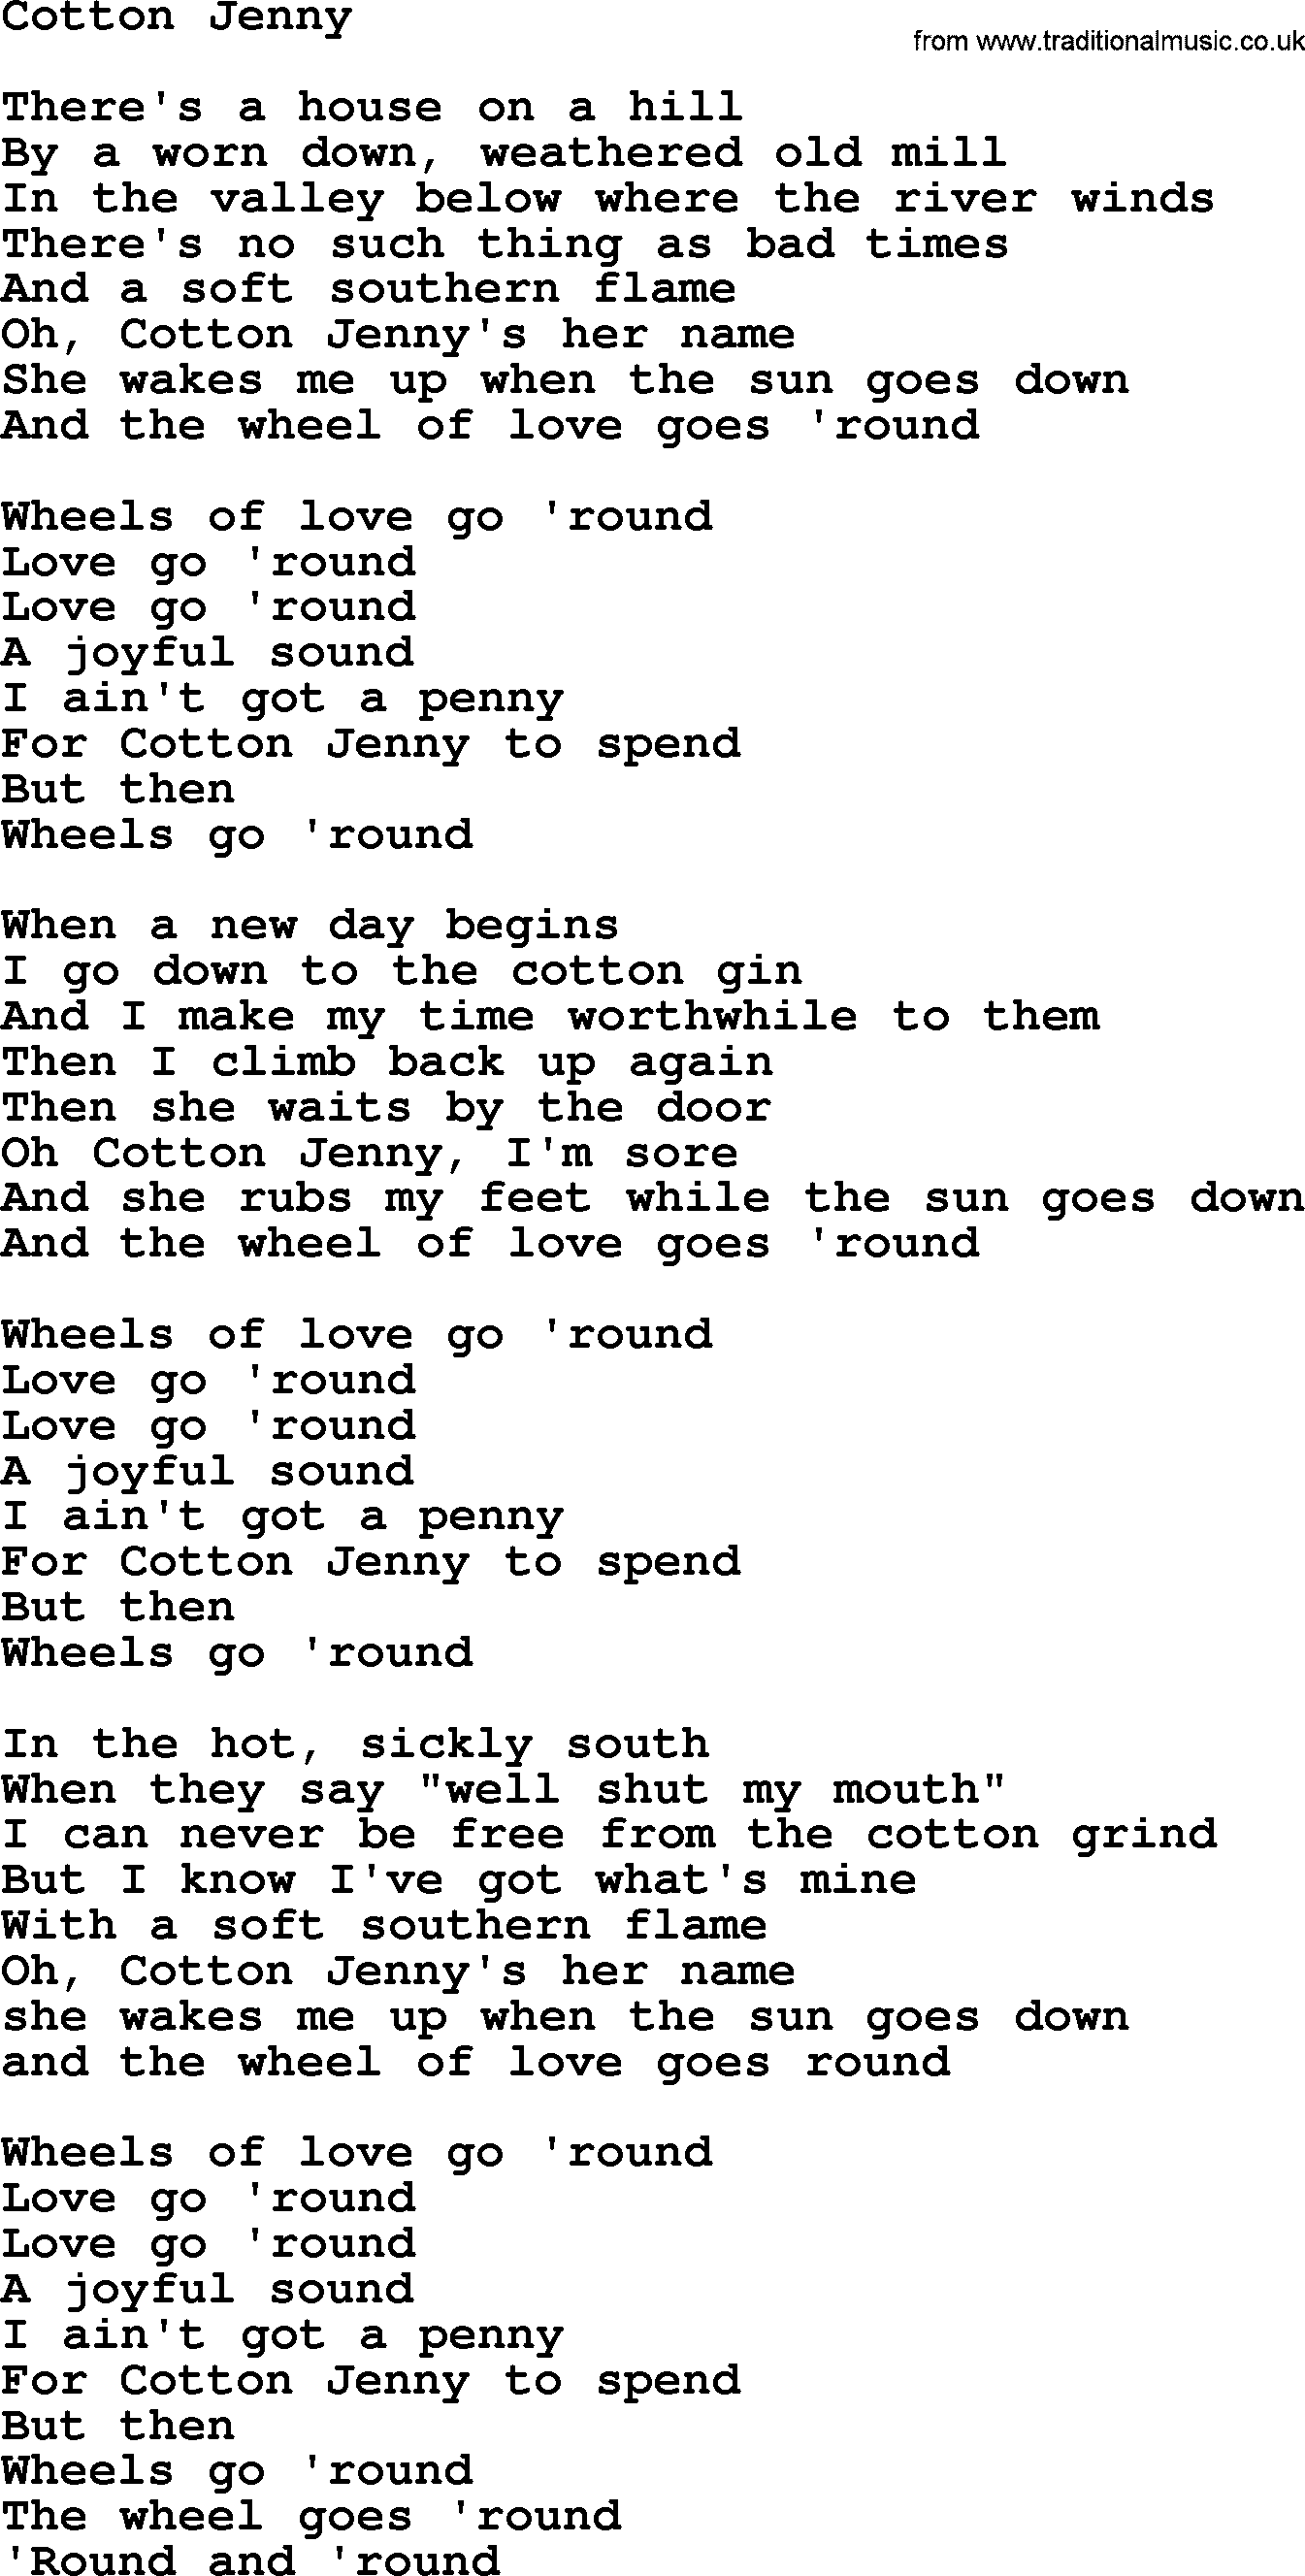 Gordon Lightfoot song Cotton Jenny, lyrics